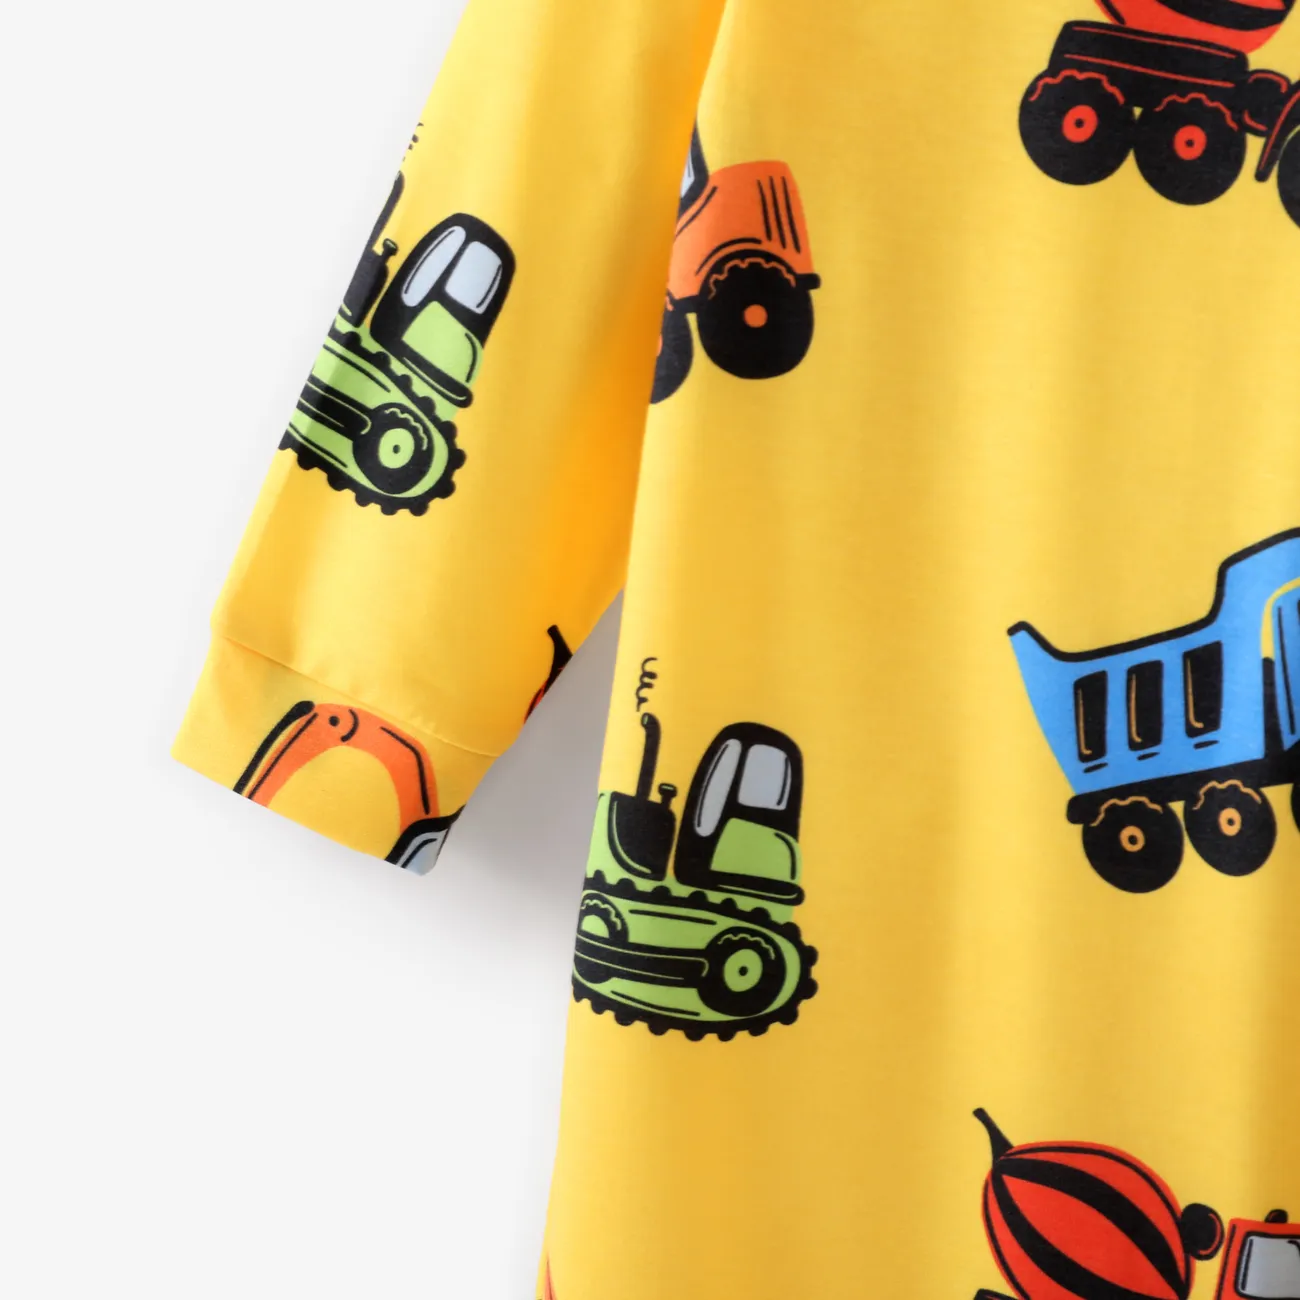 Naia™ Baby Boy Allover Construction Vehicle Print Long-sleeve Jumpsuit Yellow big image 1